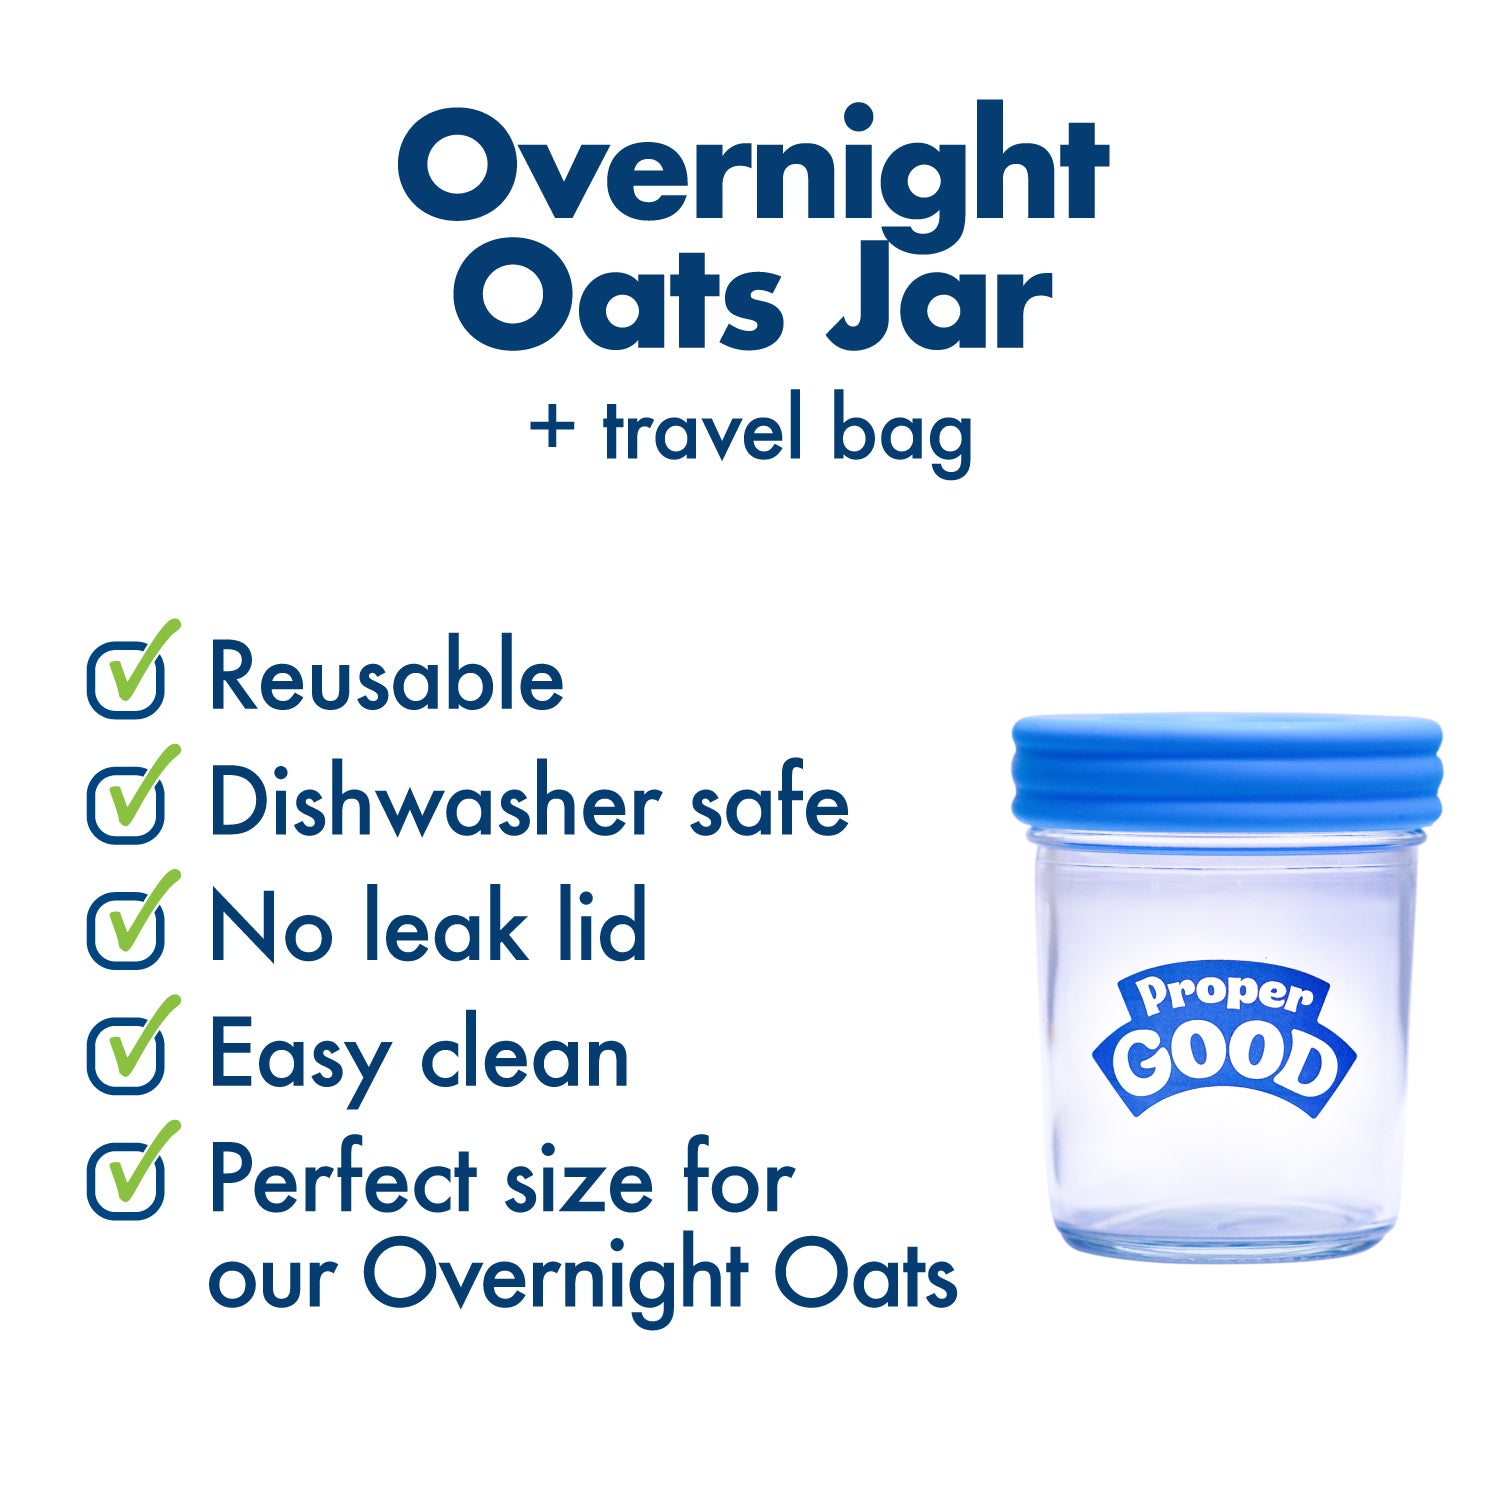 Overnight Oat Jar & Travel Bag Benefits - Eat Proper Good